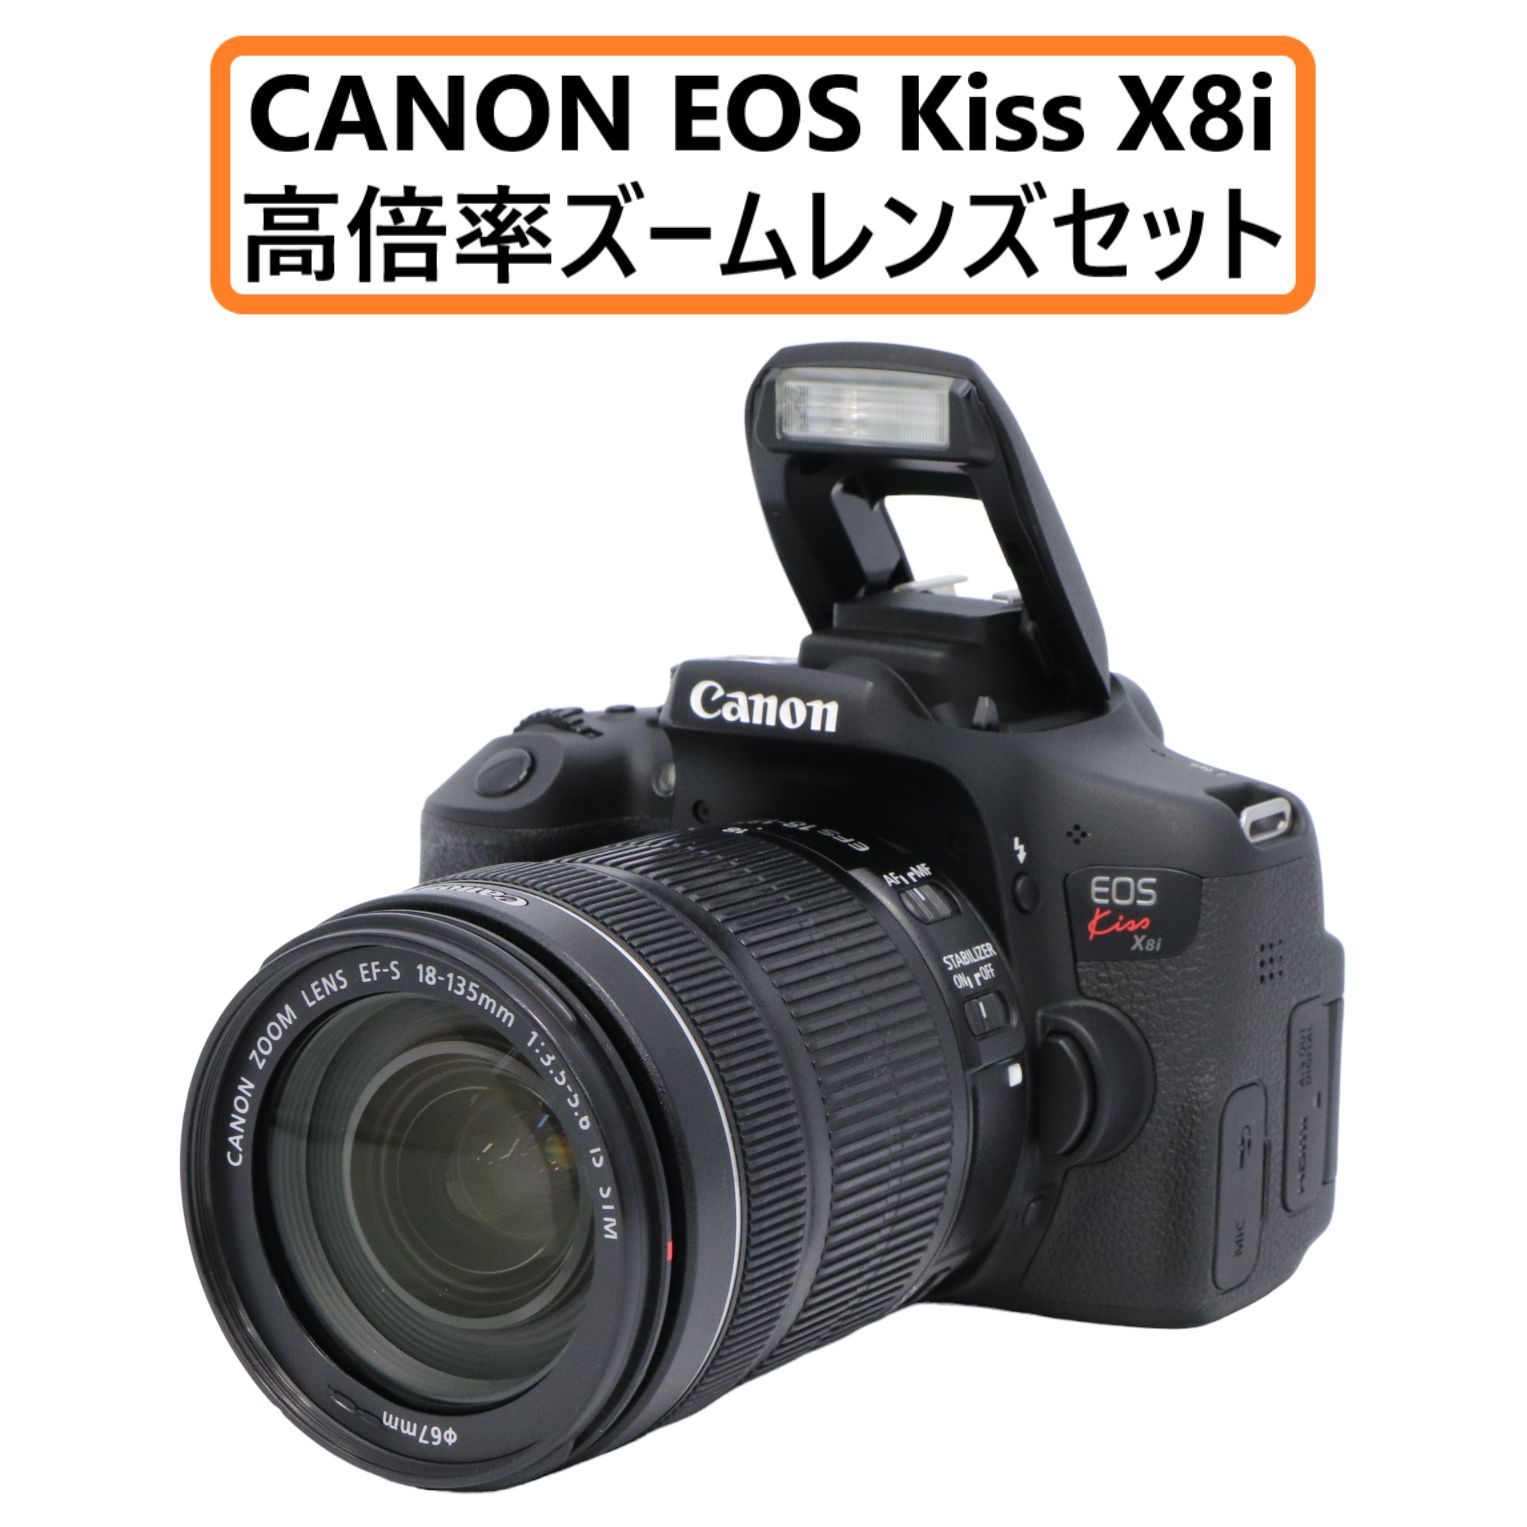 EOS kiss x8i canon キャノン　ズームレンズキット